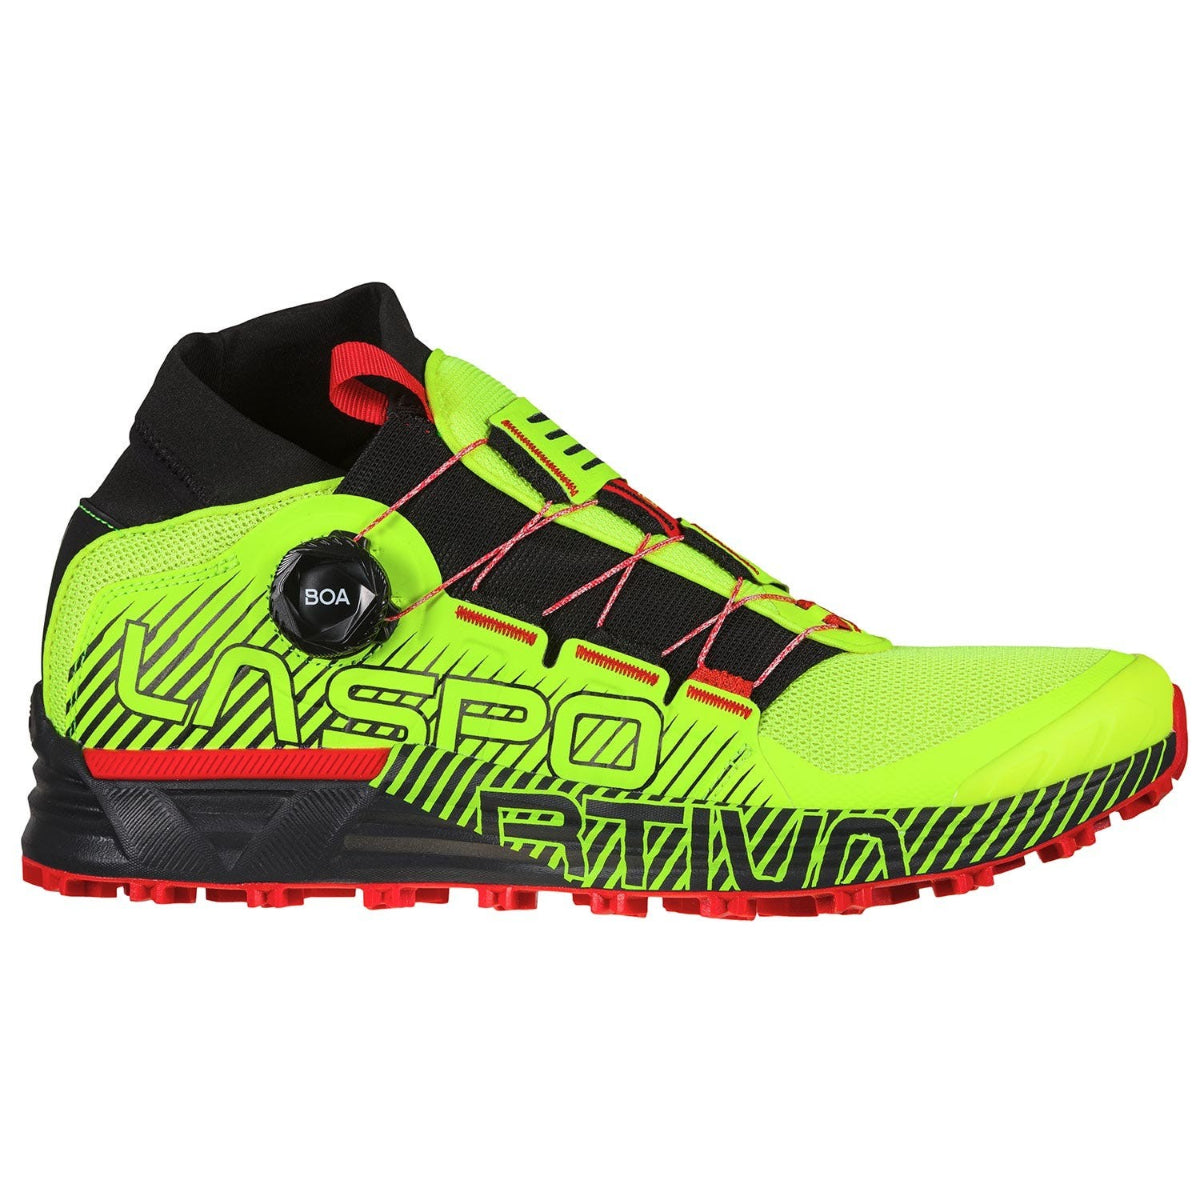 La Sportiva Cyklon (Neon/Goji) running shoe from the side showing boa lacing system